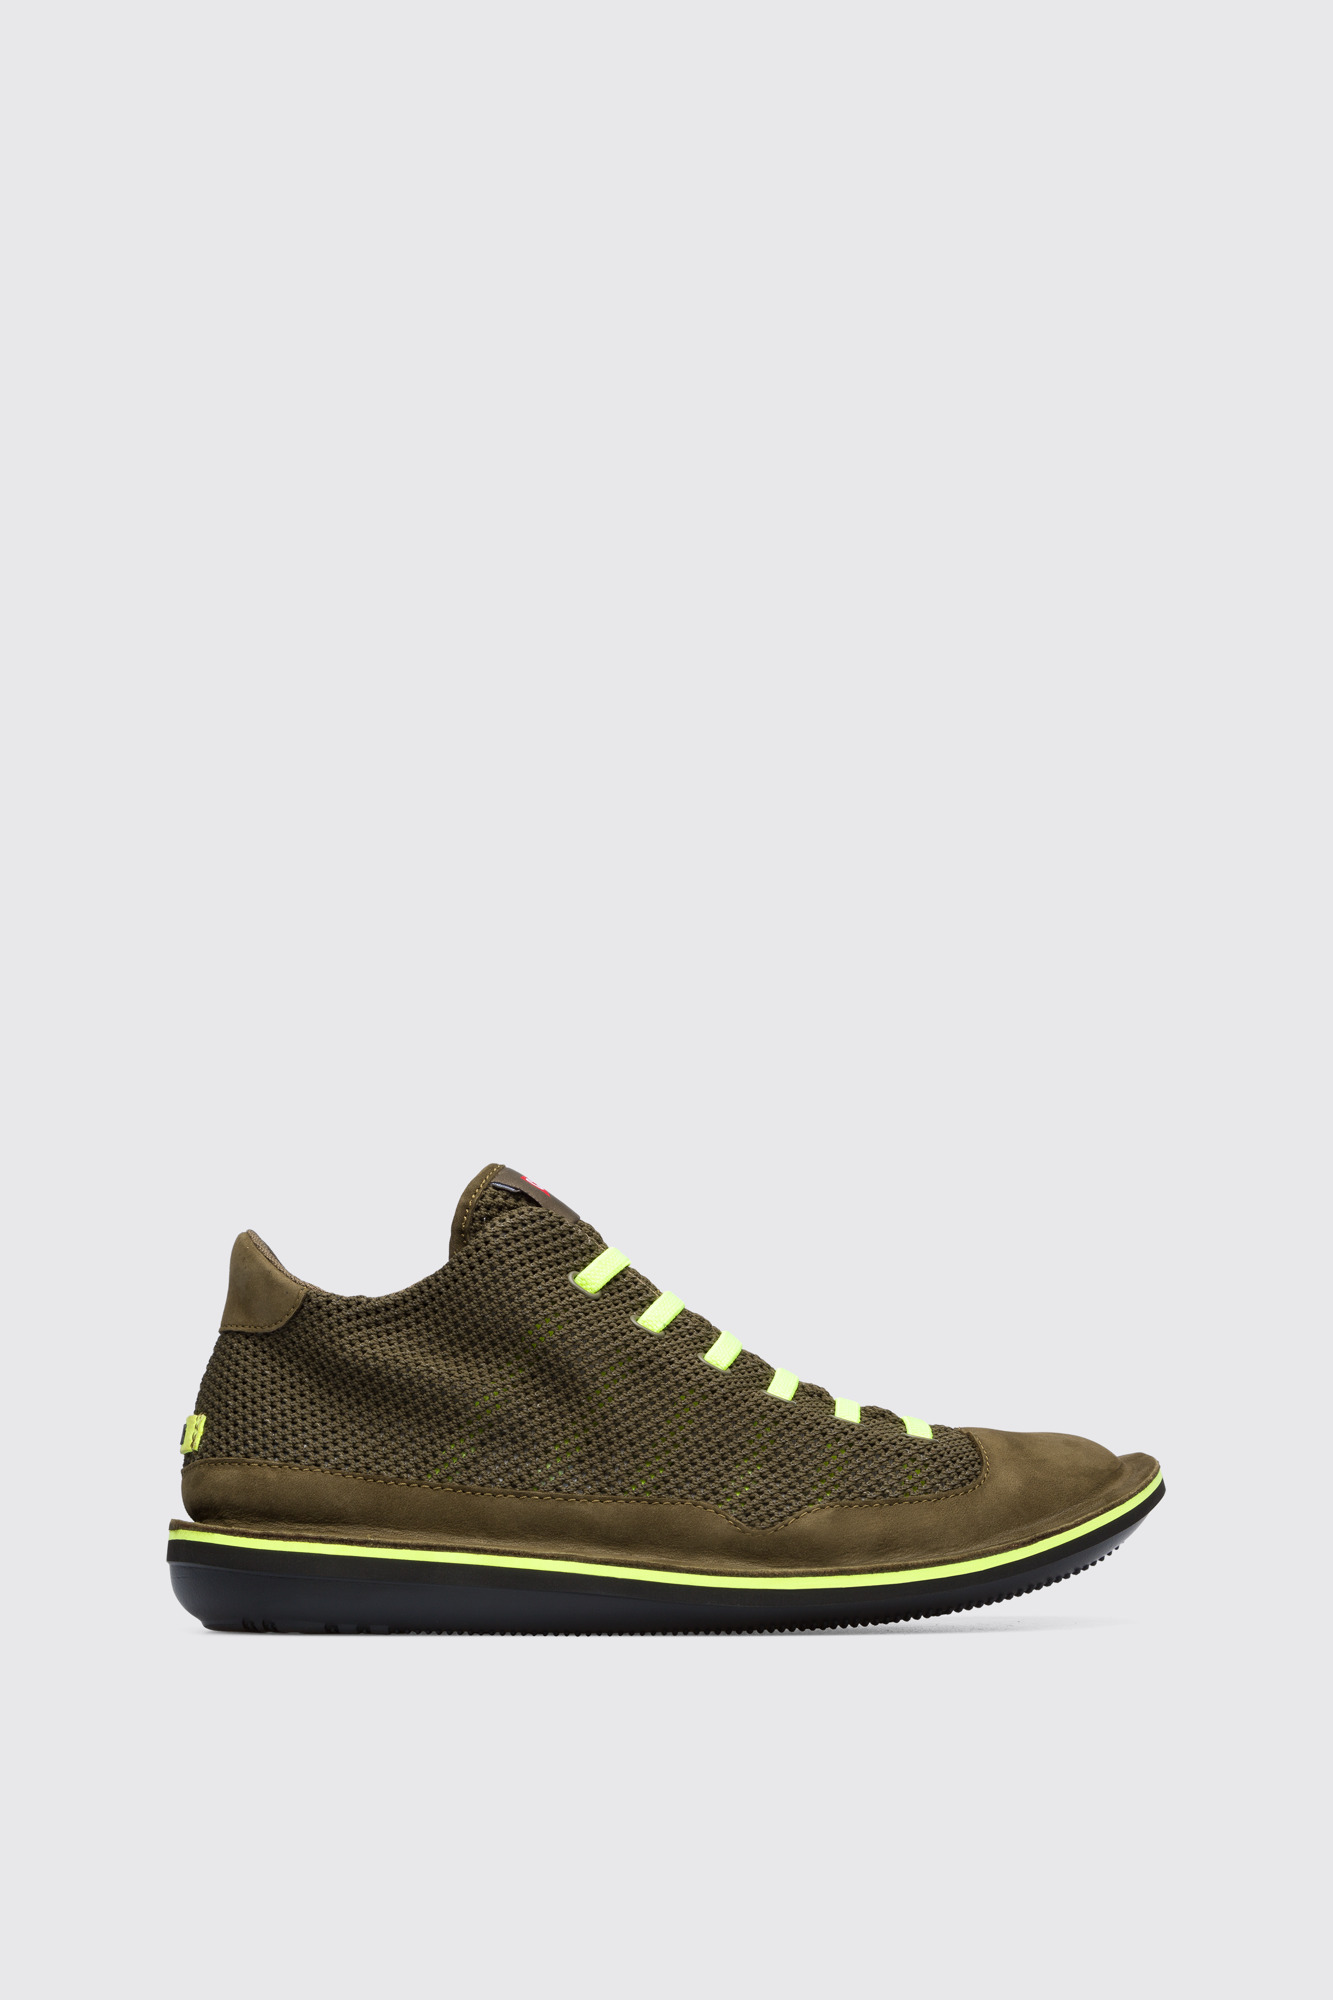 Camper Beetle K300327-002 Mens Green Canvas Mesh Slip On Euro Sneakers Shoes